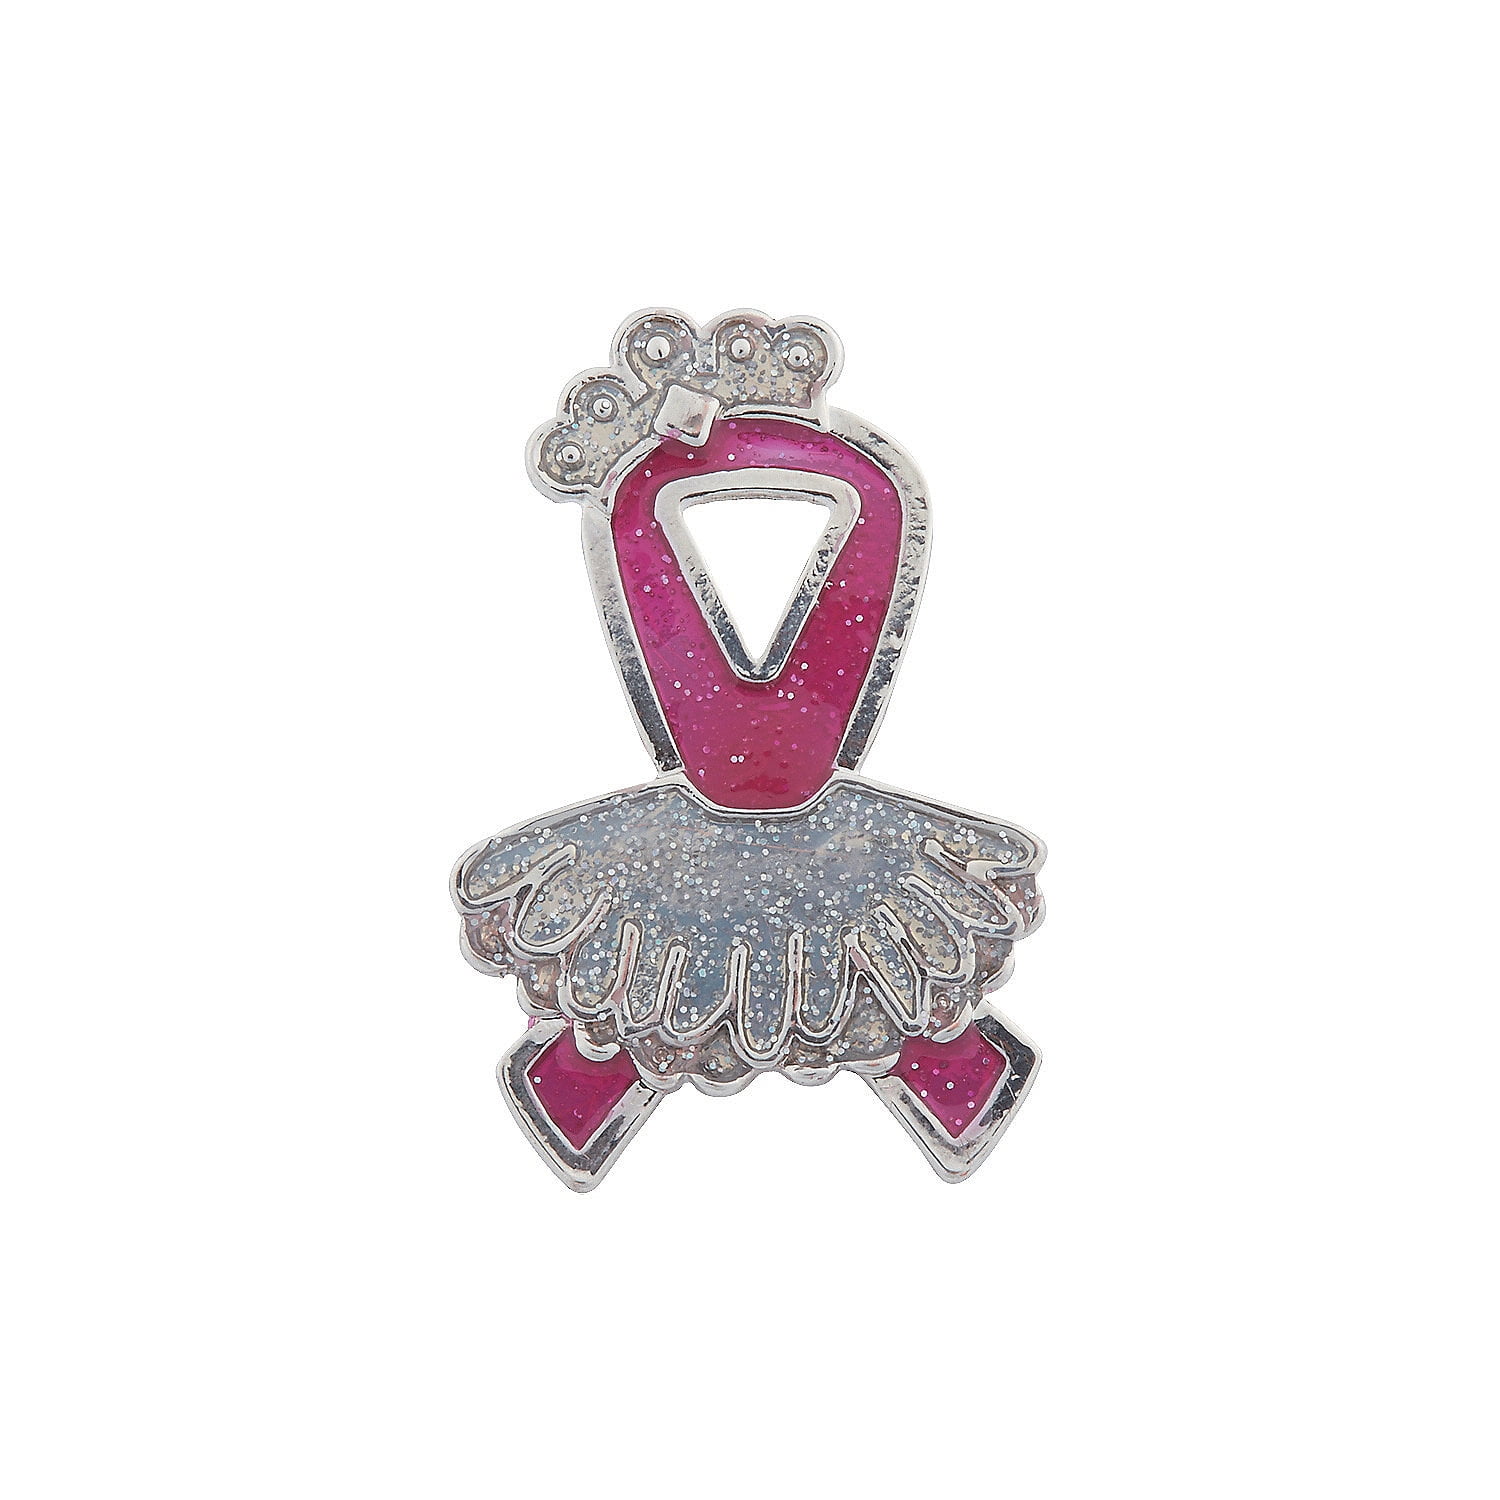 Pins Fun Express Novelty Pins Pink Ribbon Tutu Pin Jewelry 12 Pieces 